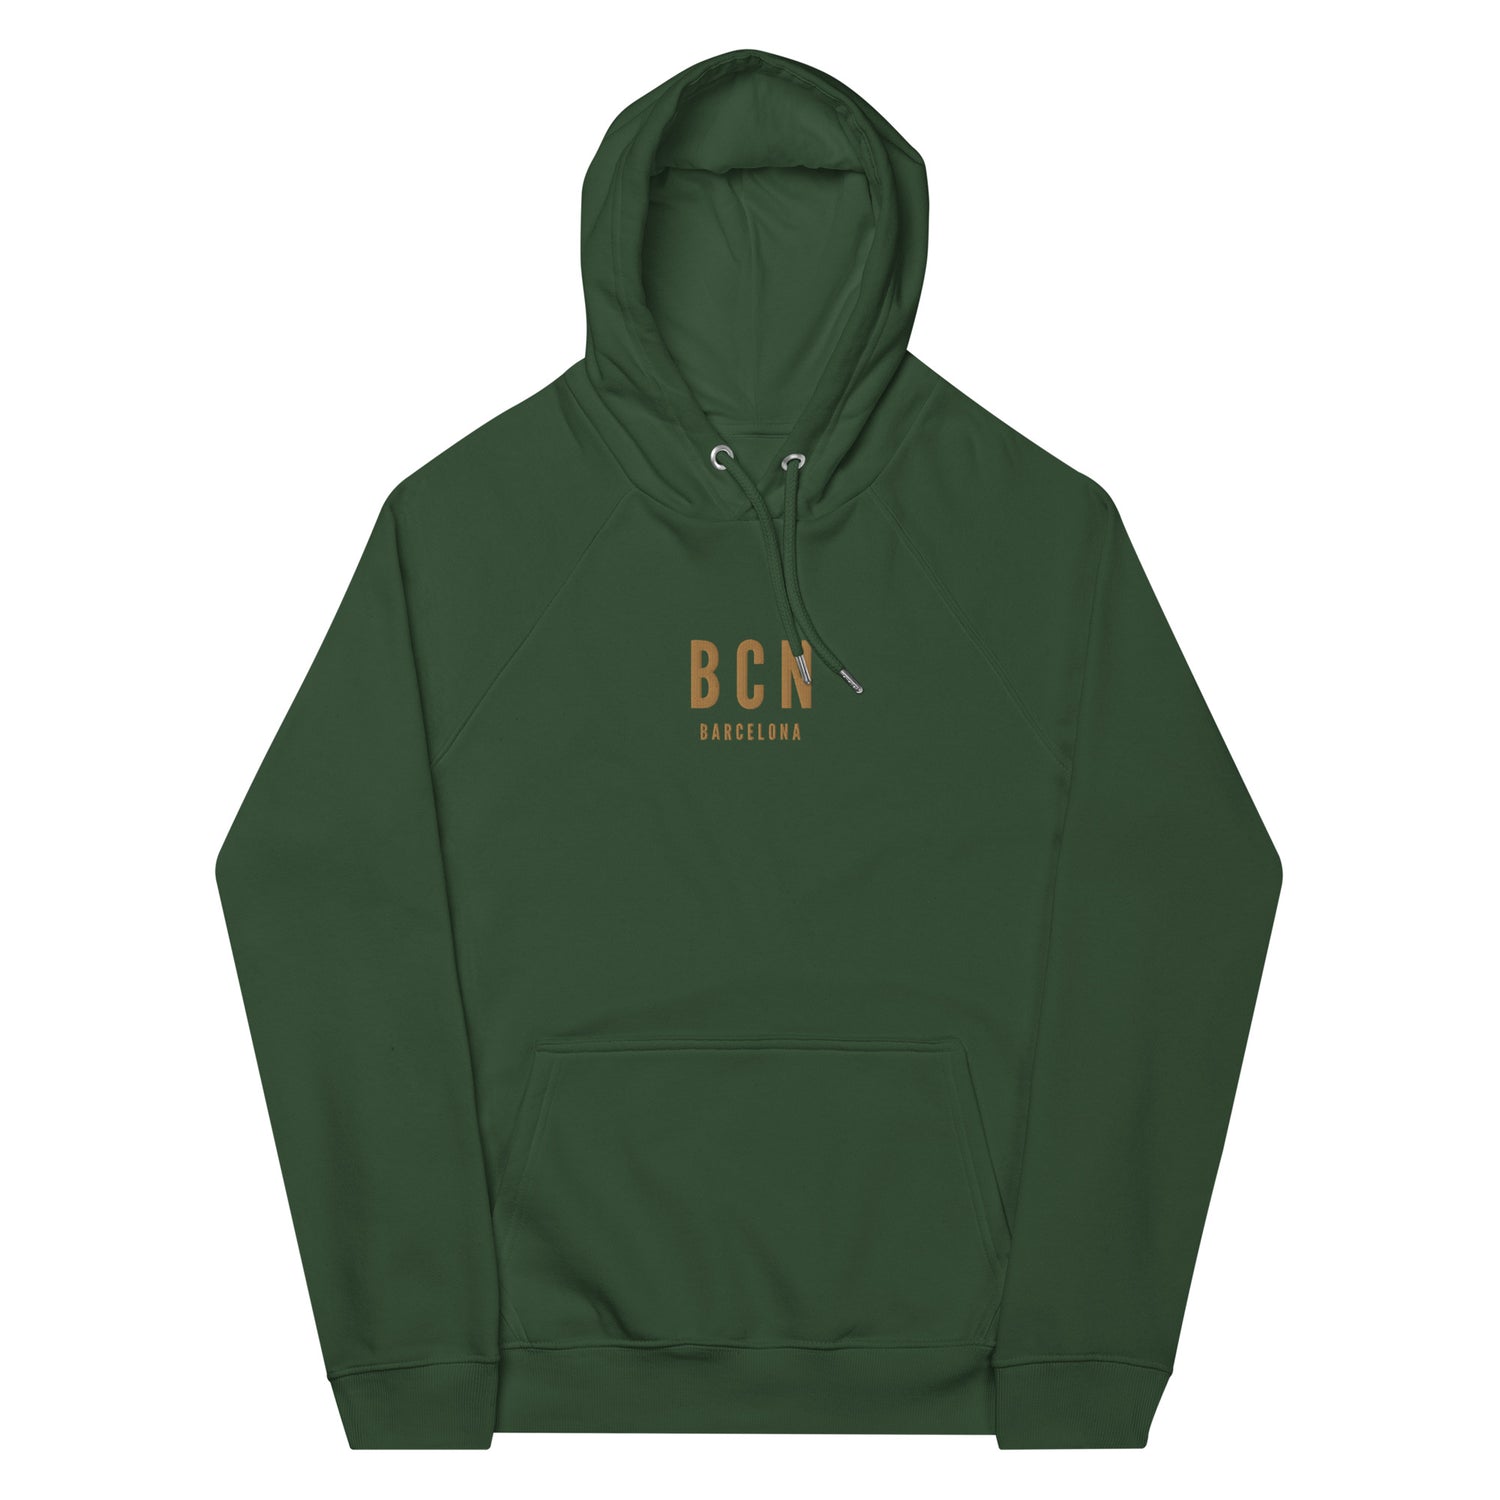 Barcelona Spain Hoodies and Sweatshirts • BCN Airport Code